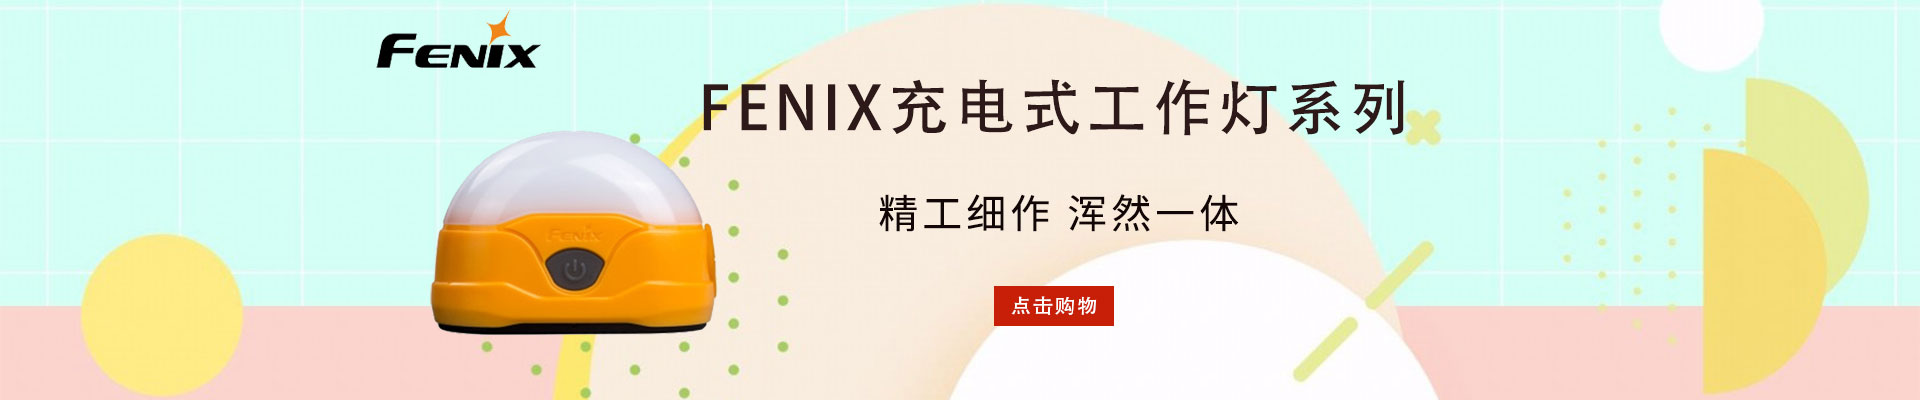 FENIX/朗恒|手动工具